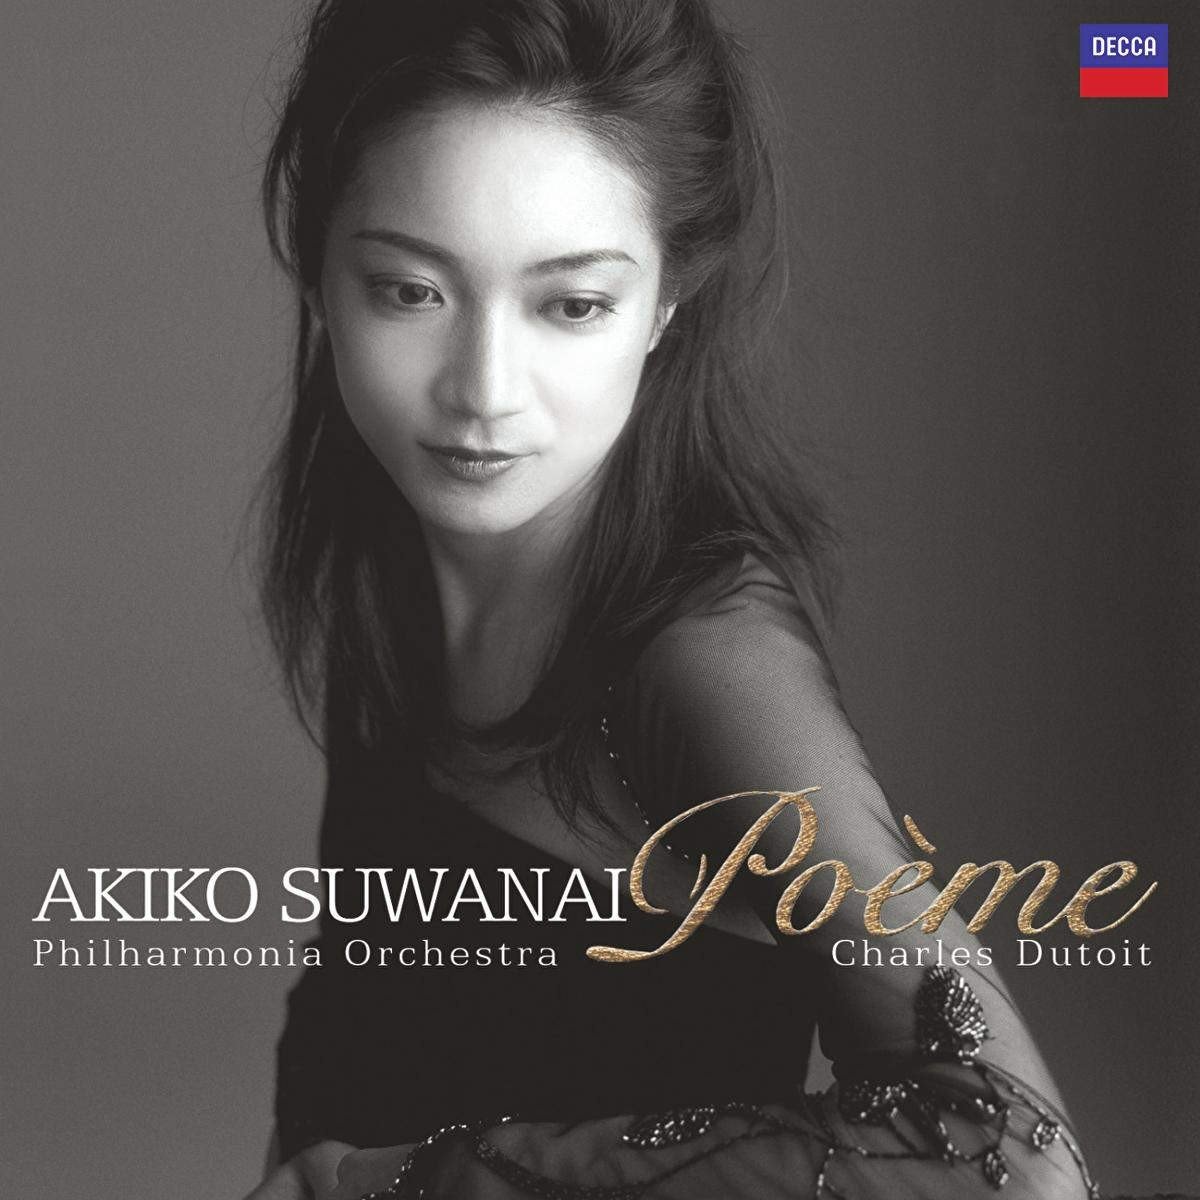 [Album] Akiko Suwanai (諏訪内晶子) – Poeme -詩曲- [192/24] (2004/2014) [FLAC 24bit/192kHz]